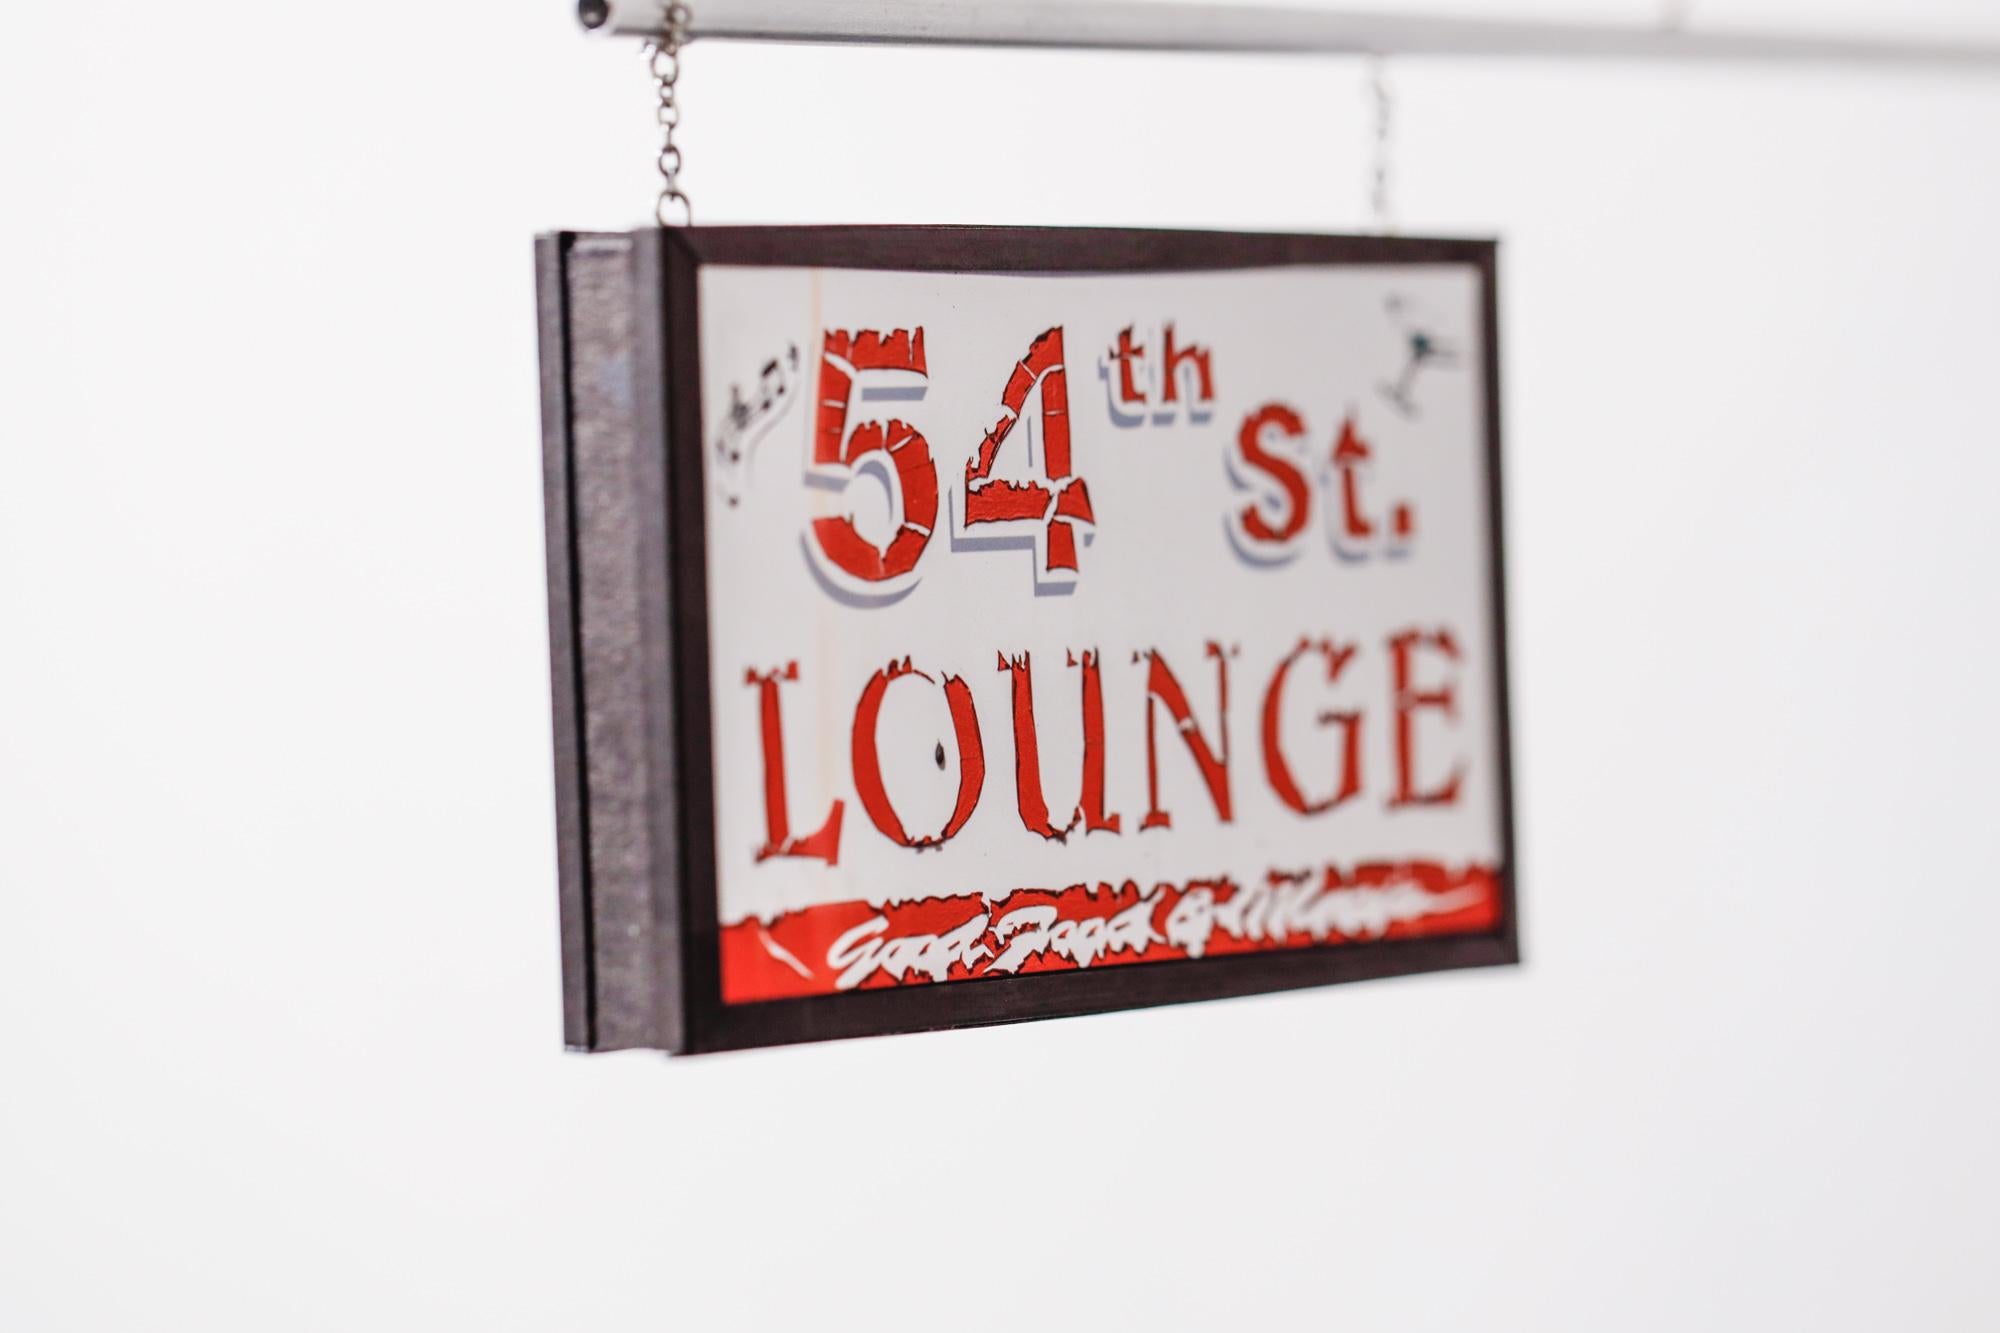 54th st lounge